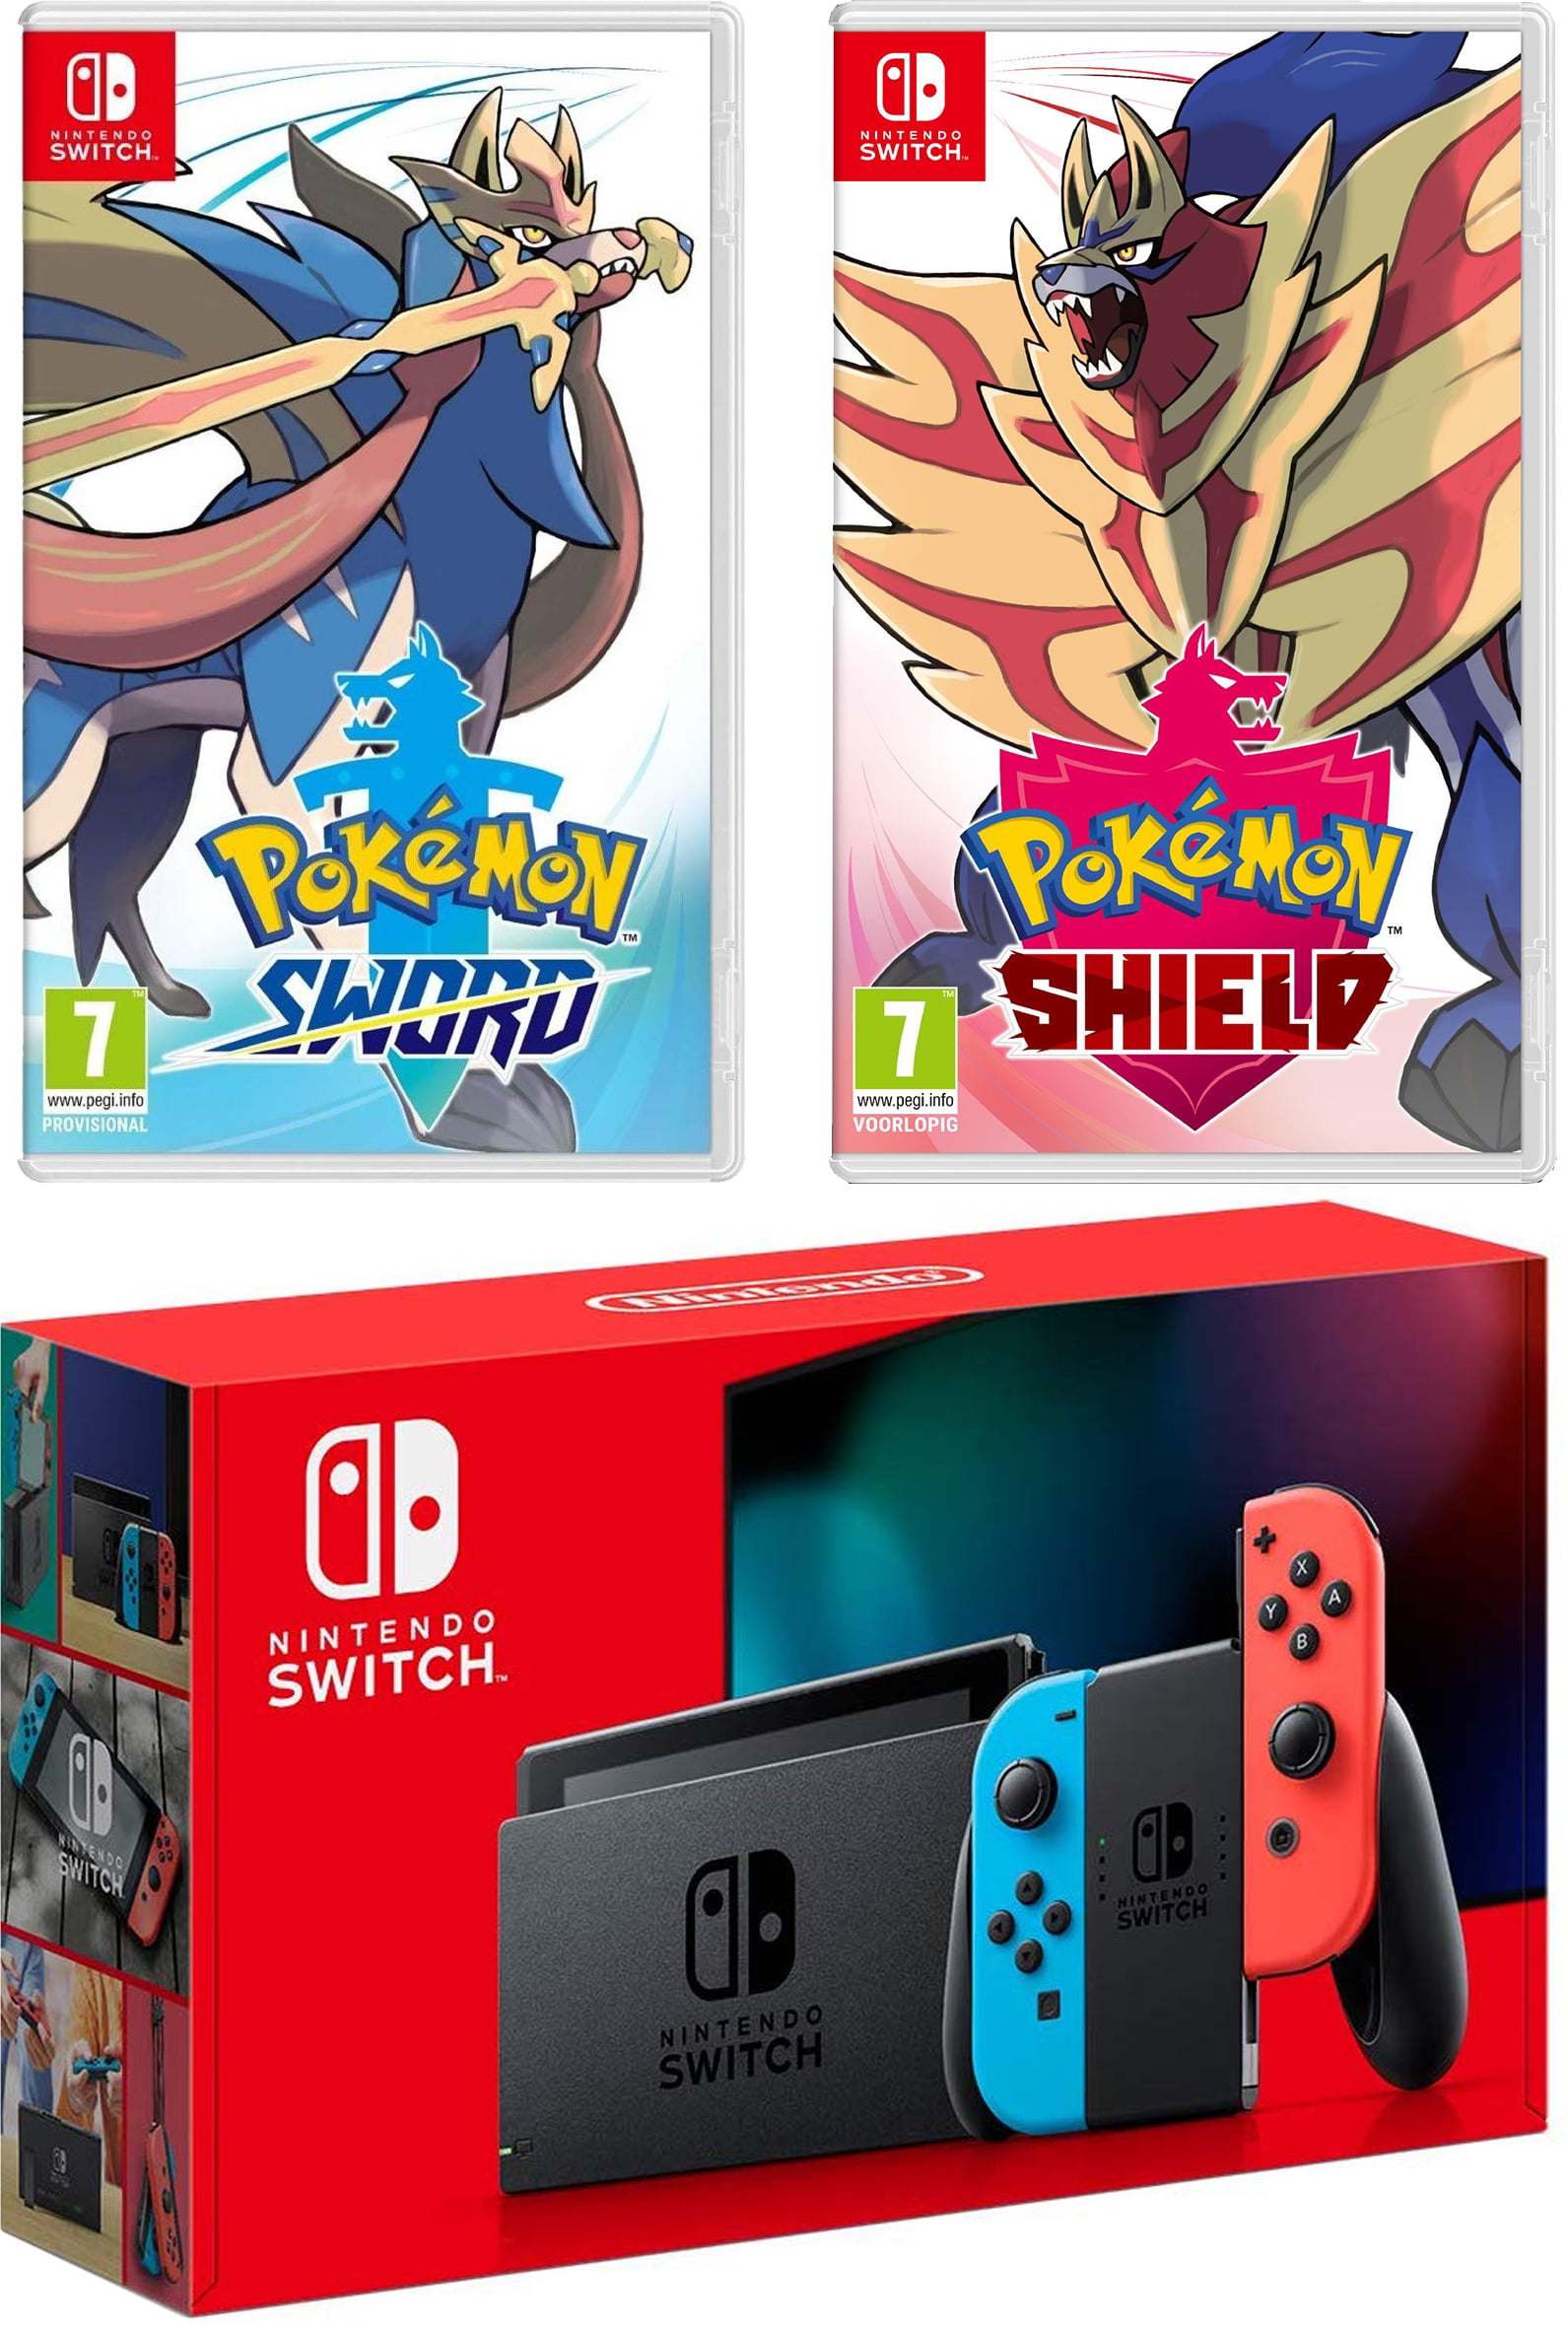 Pokemon Sword and Shield launch Nov. 15 on Nintendo Switch - CNET